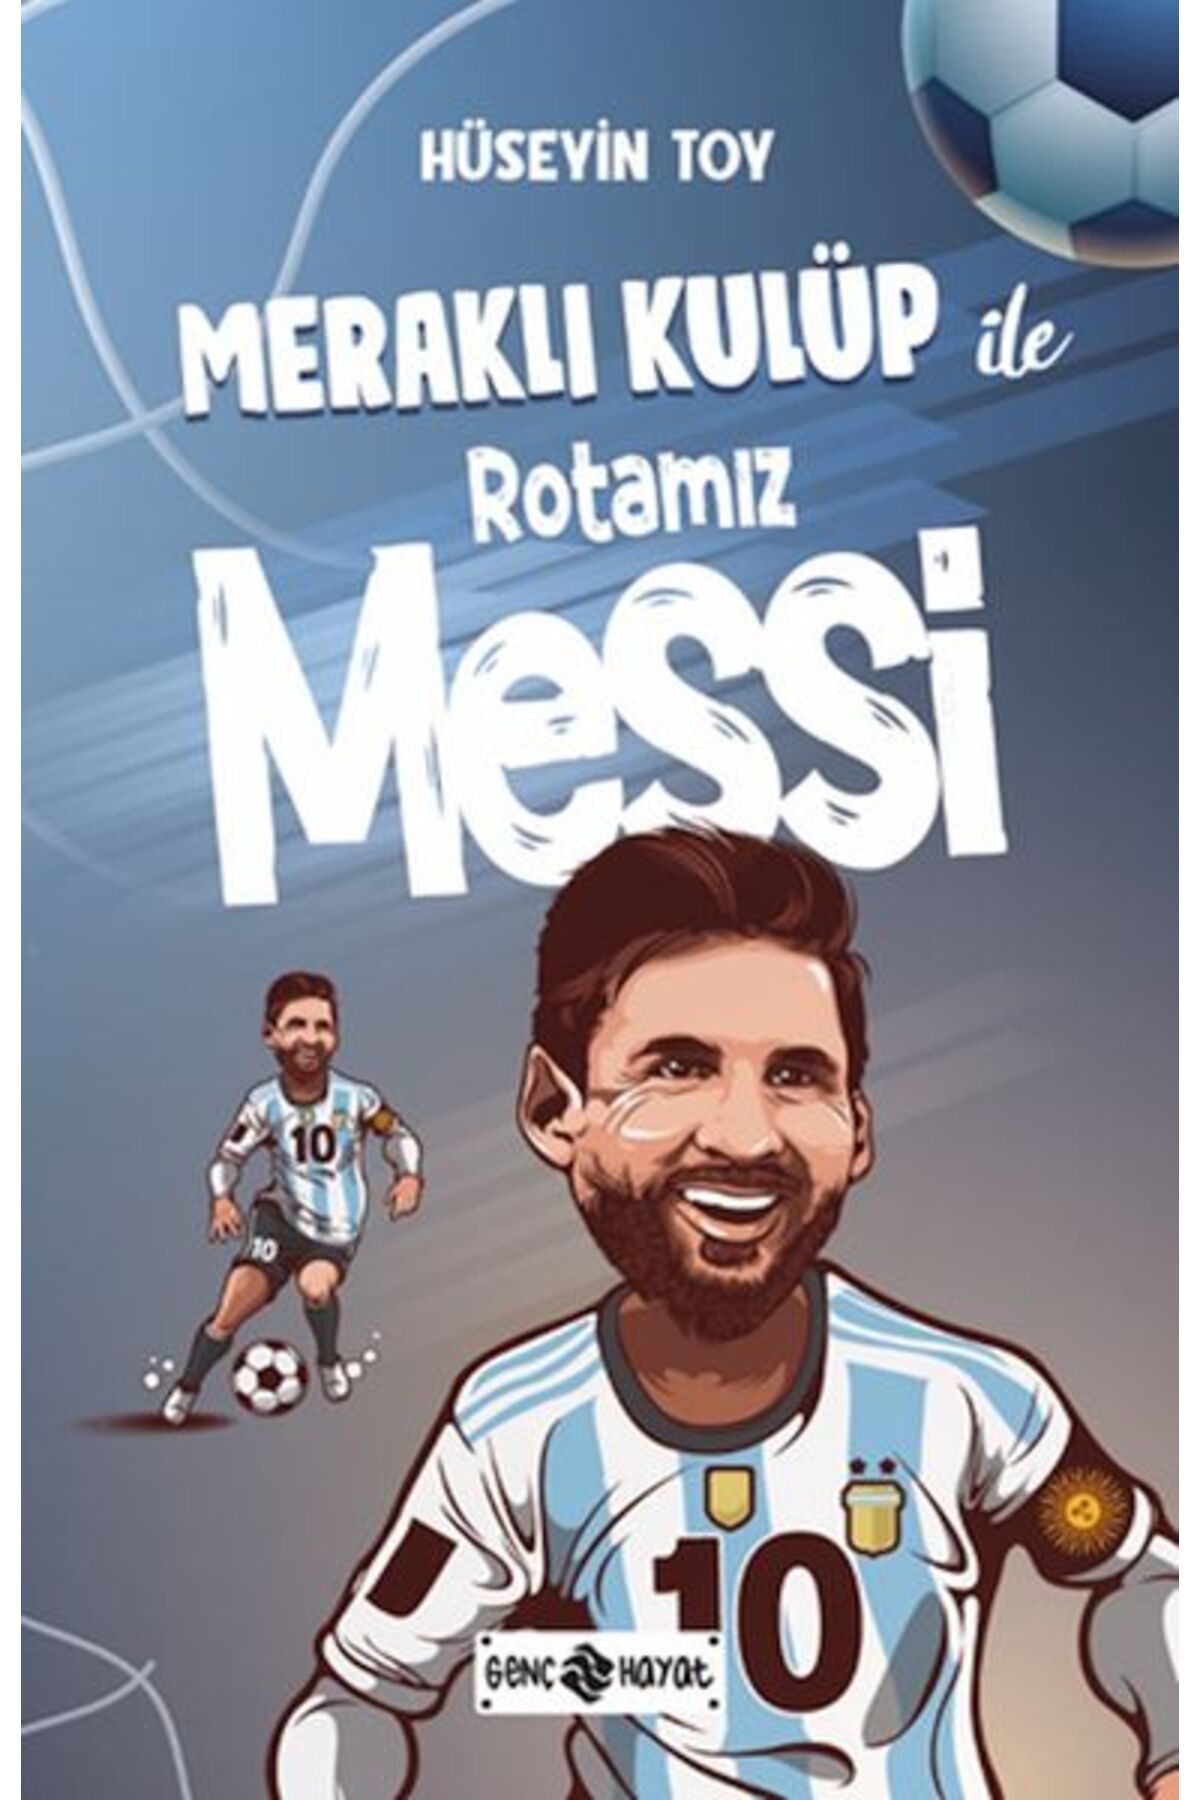 Afrodit Meraklı Kulüp ile Rotamız Messi